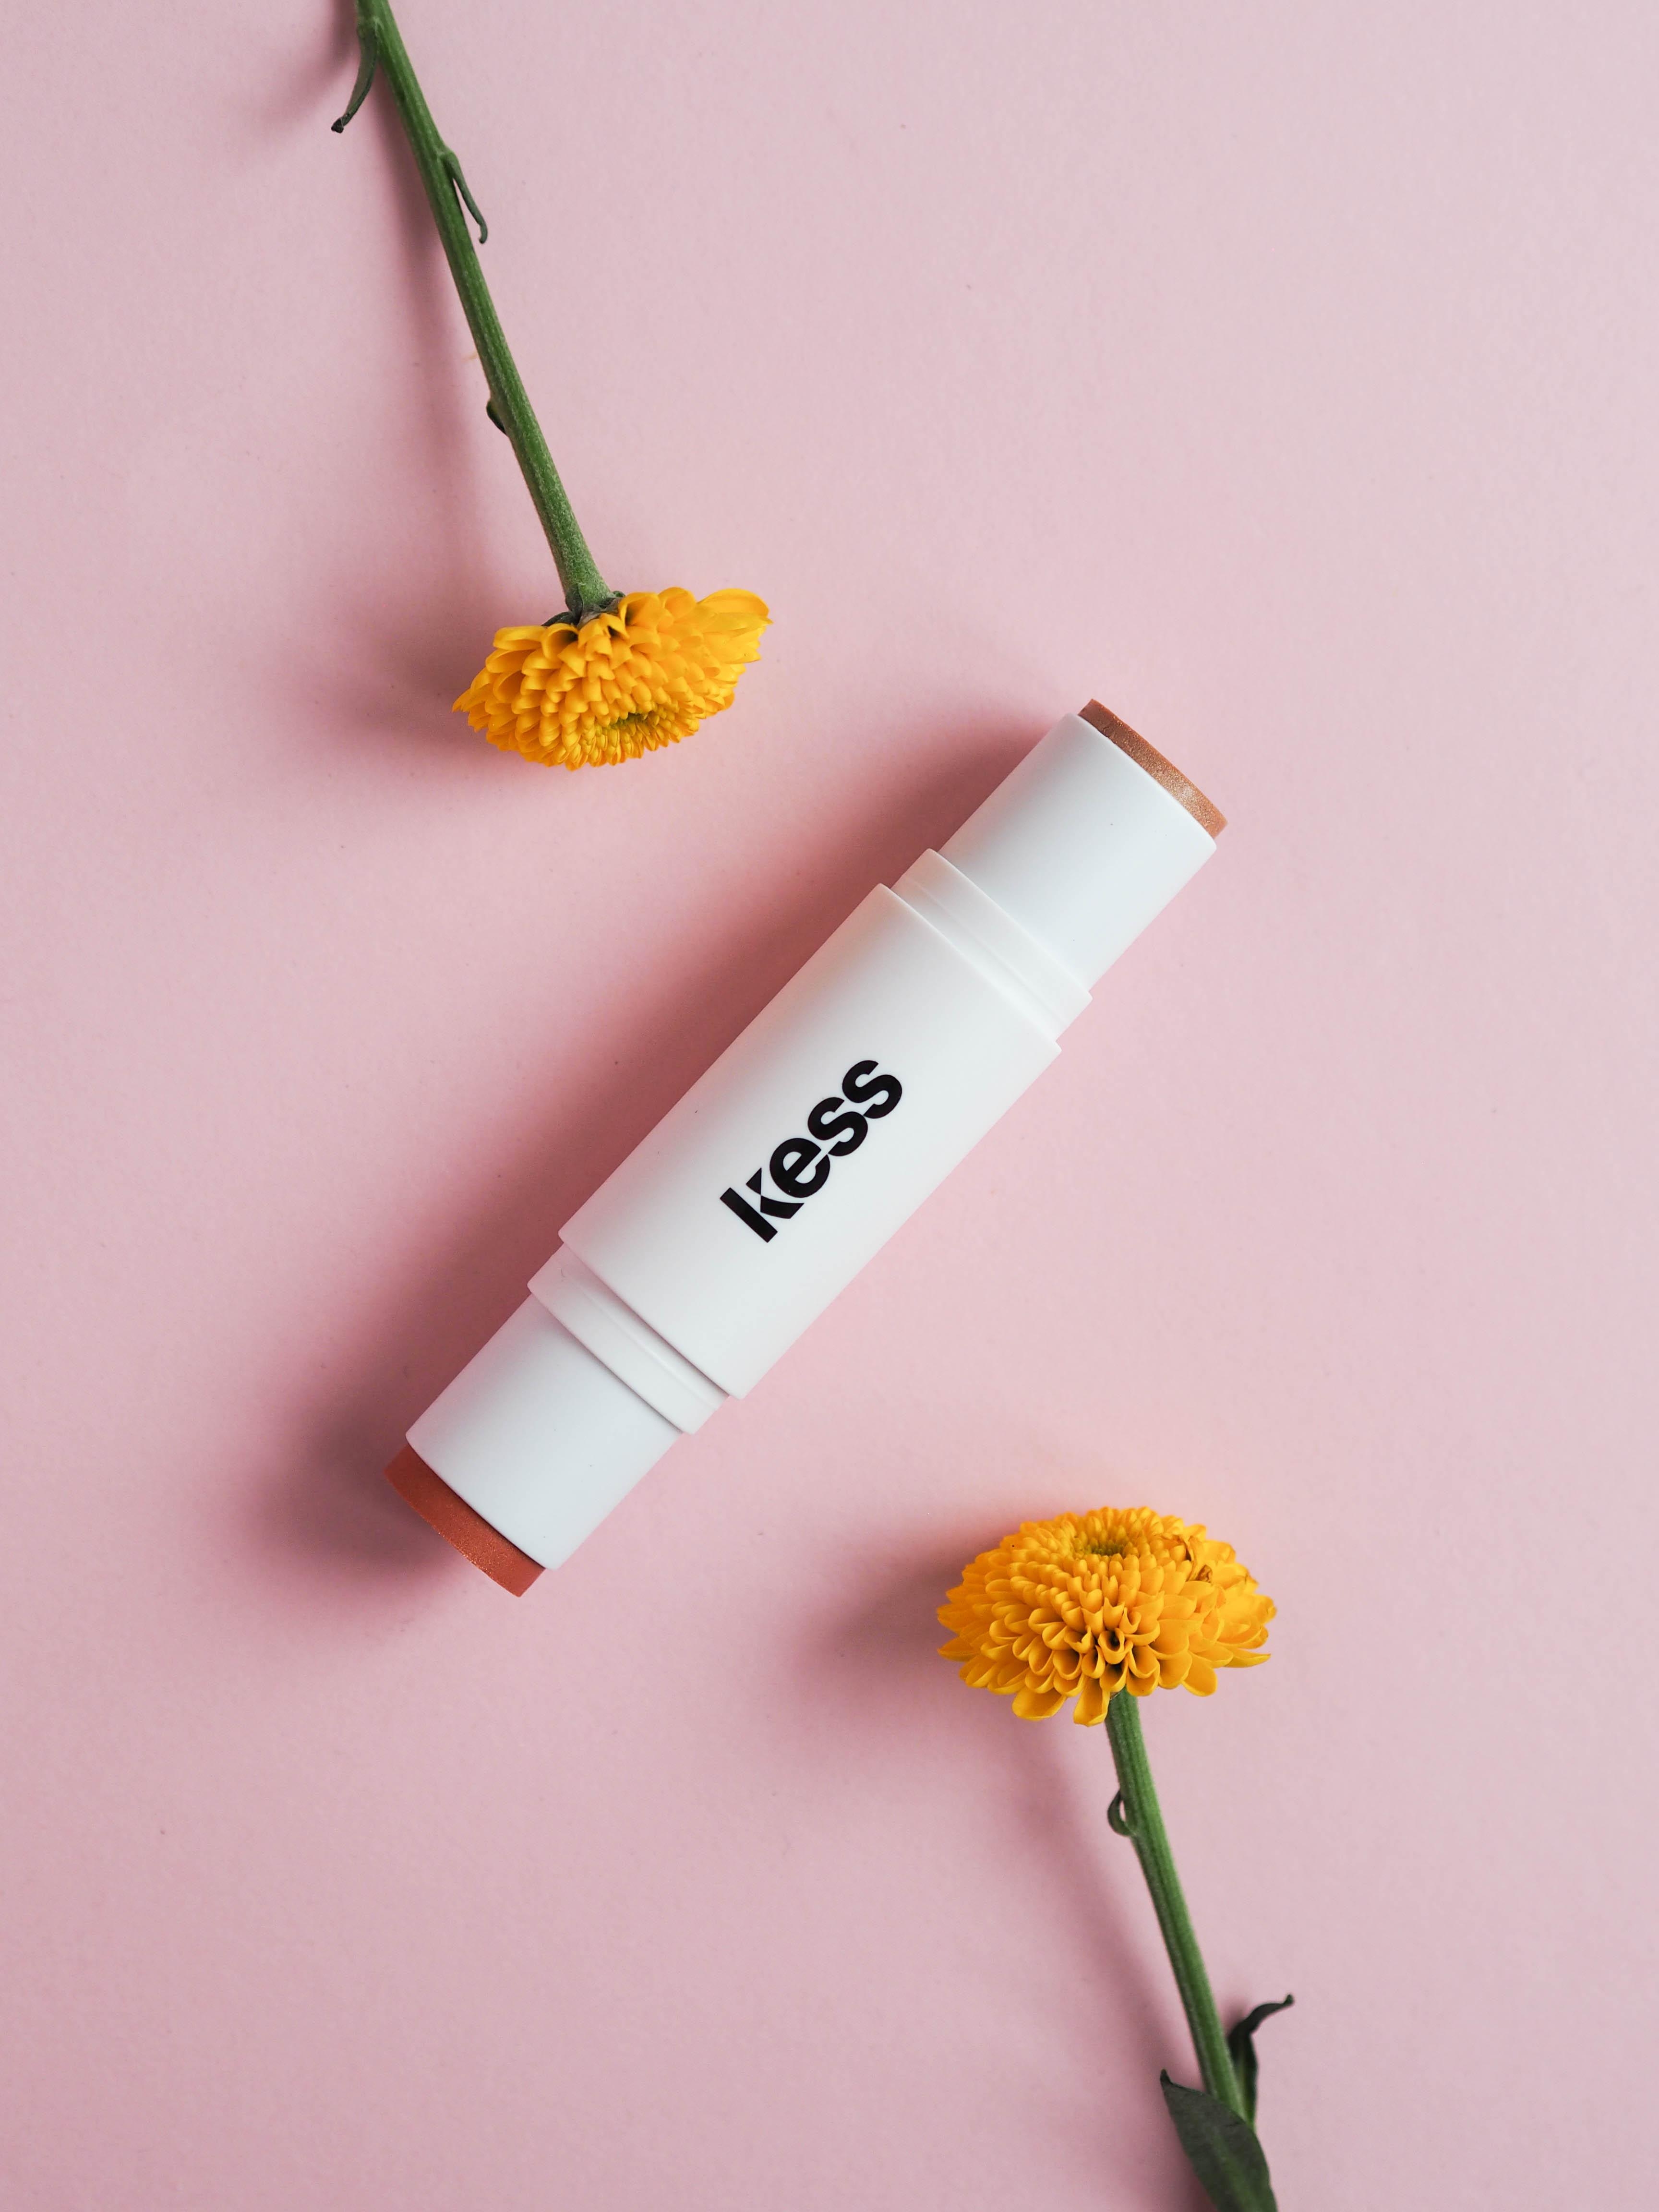 Fresh-Up: Der Kess 2-in-1 Duo-Stick in limitierter Terracotta-Sun Edition sorgt für instant Glow #beautylieblinge #kess